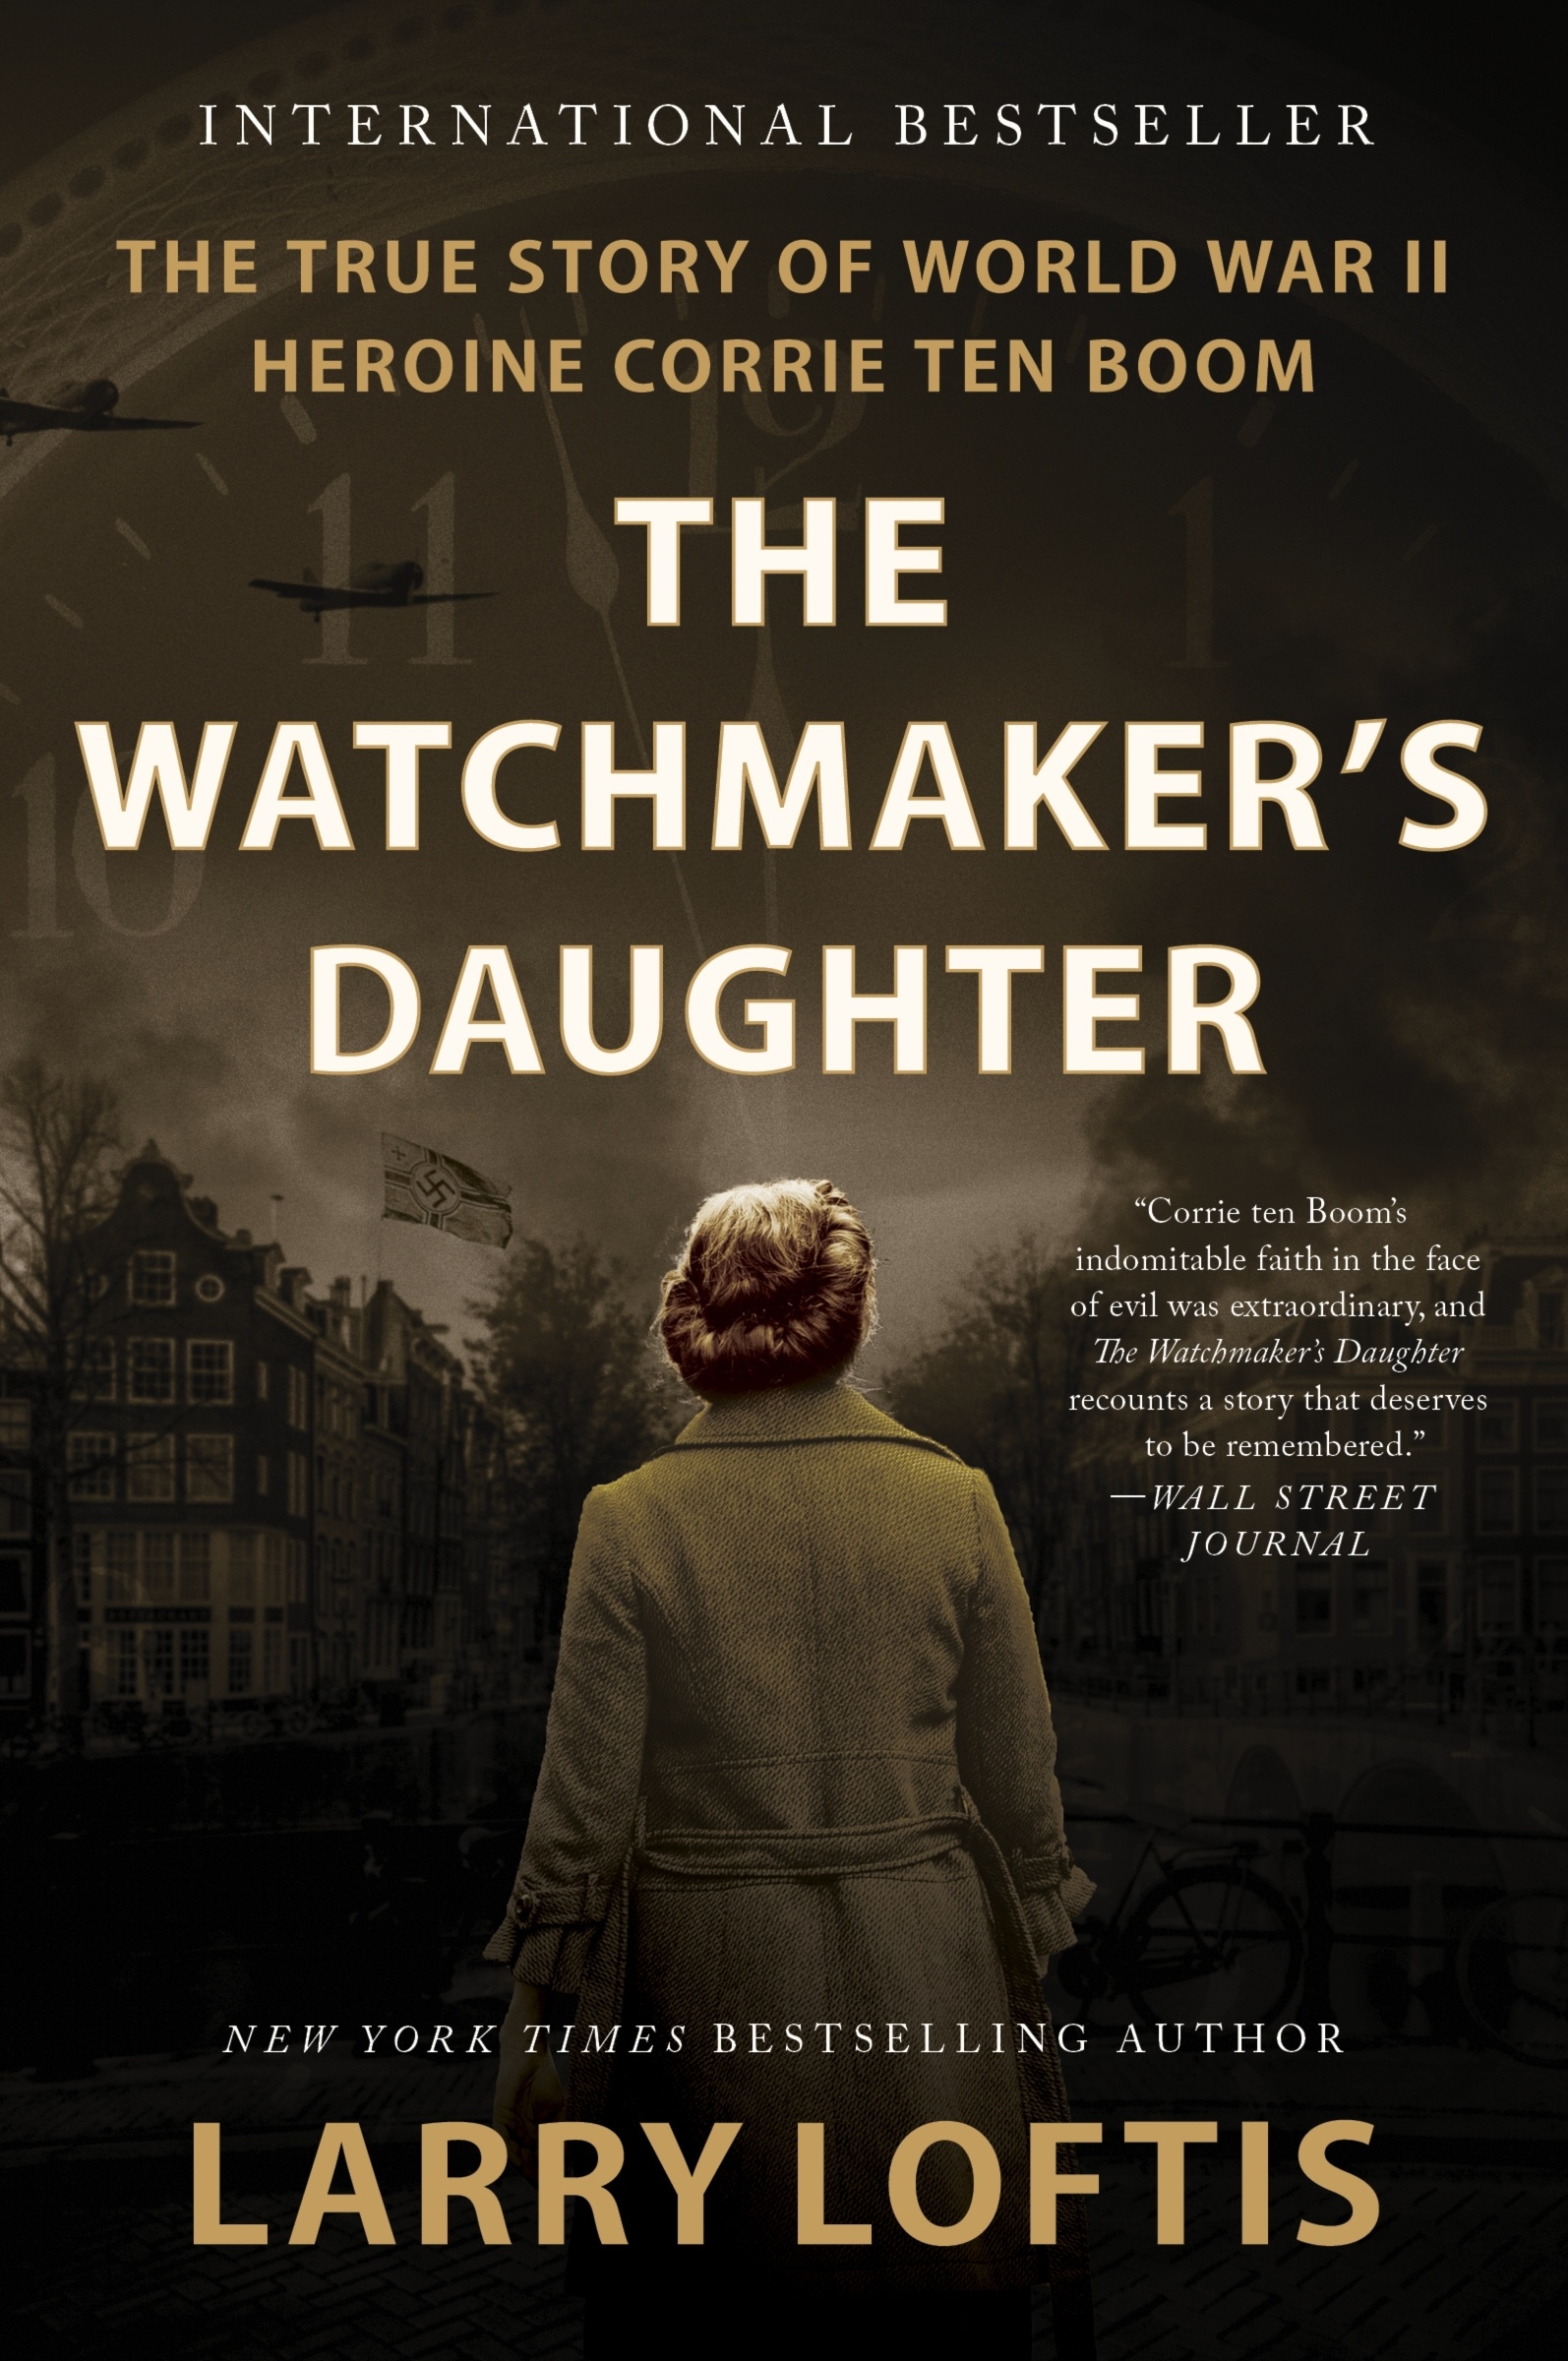 The Watchmaker's Daughter The True Story of World War II Heroine Corrie ten Boom cover image